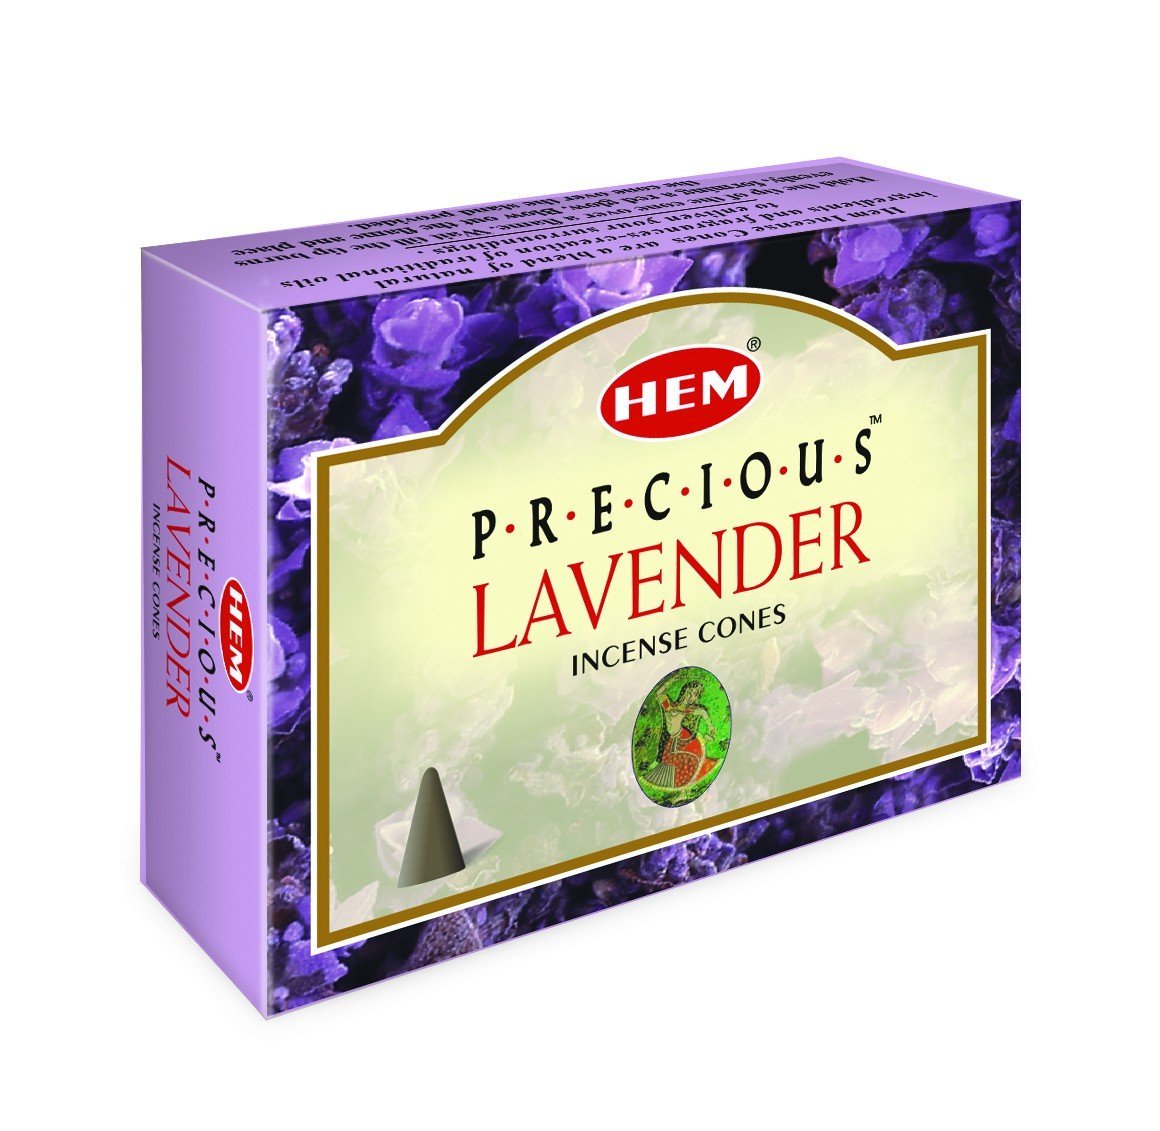 HEM - Precious Lavender - 120 Incense Cones